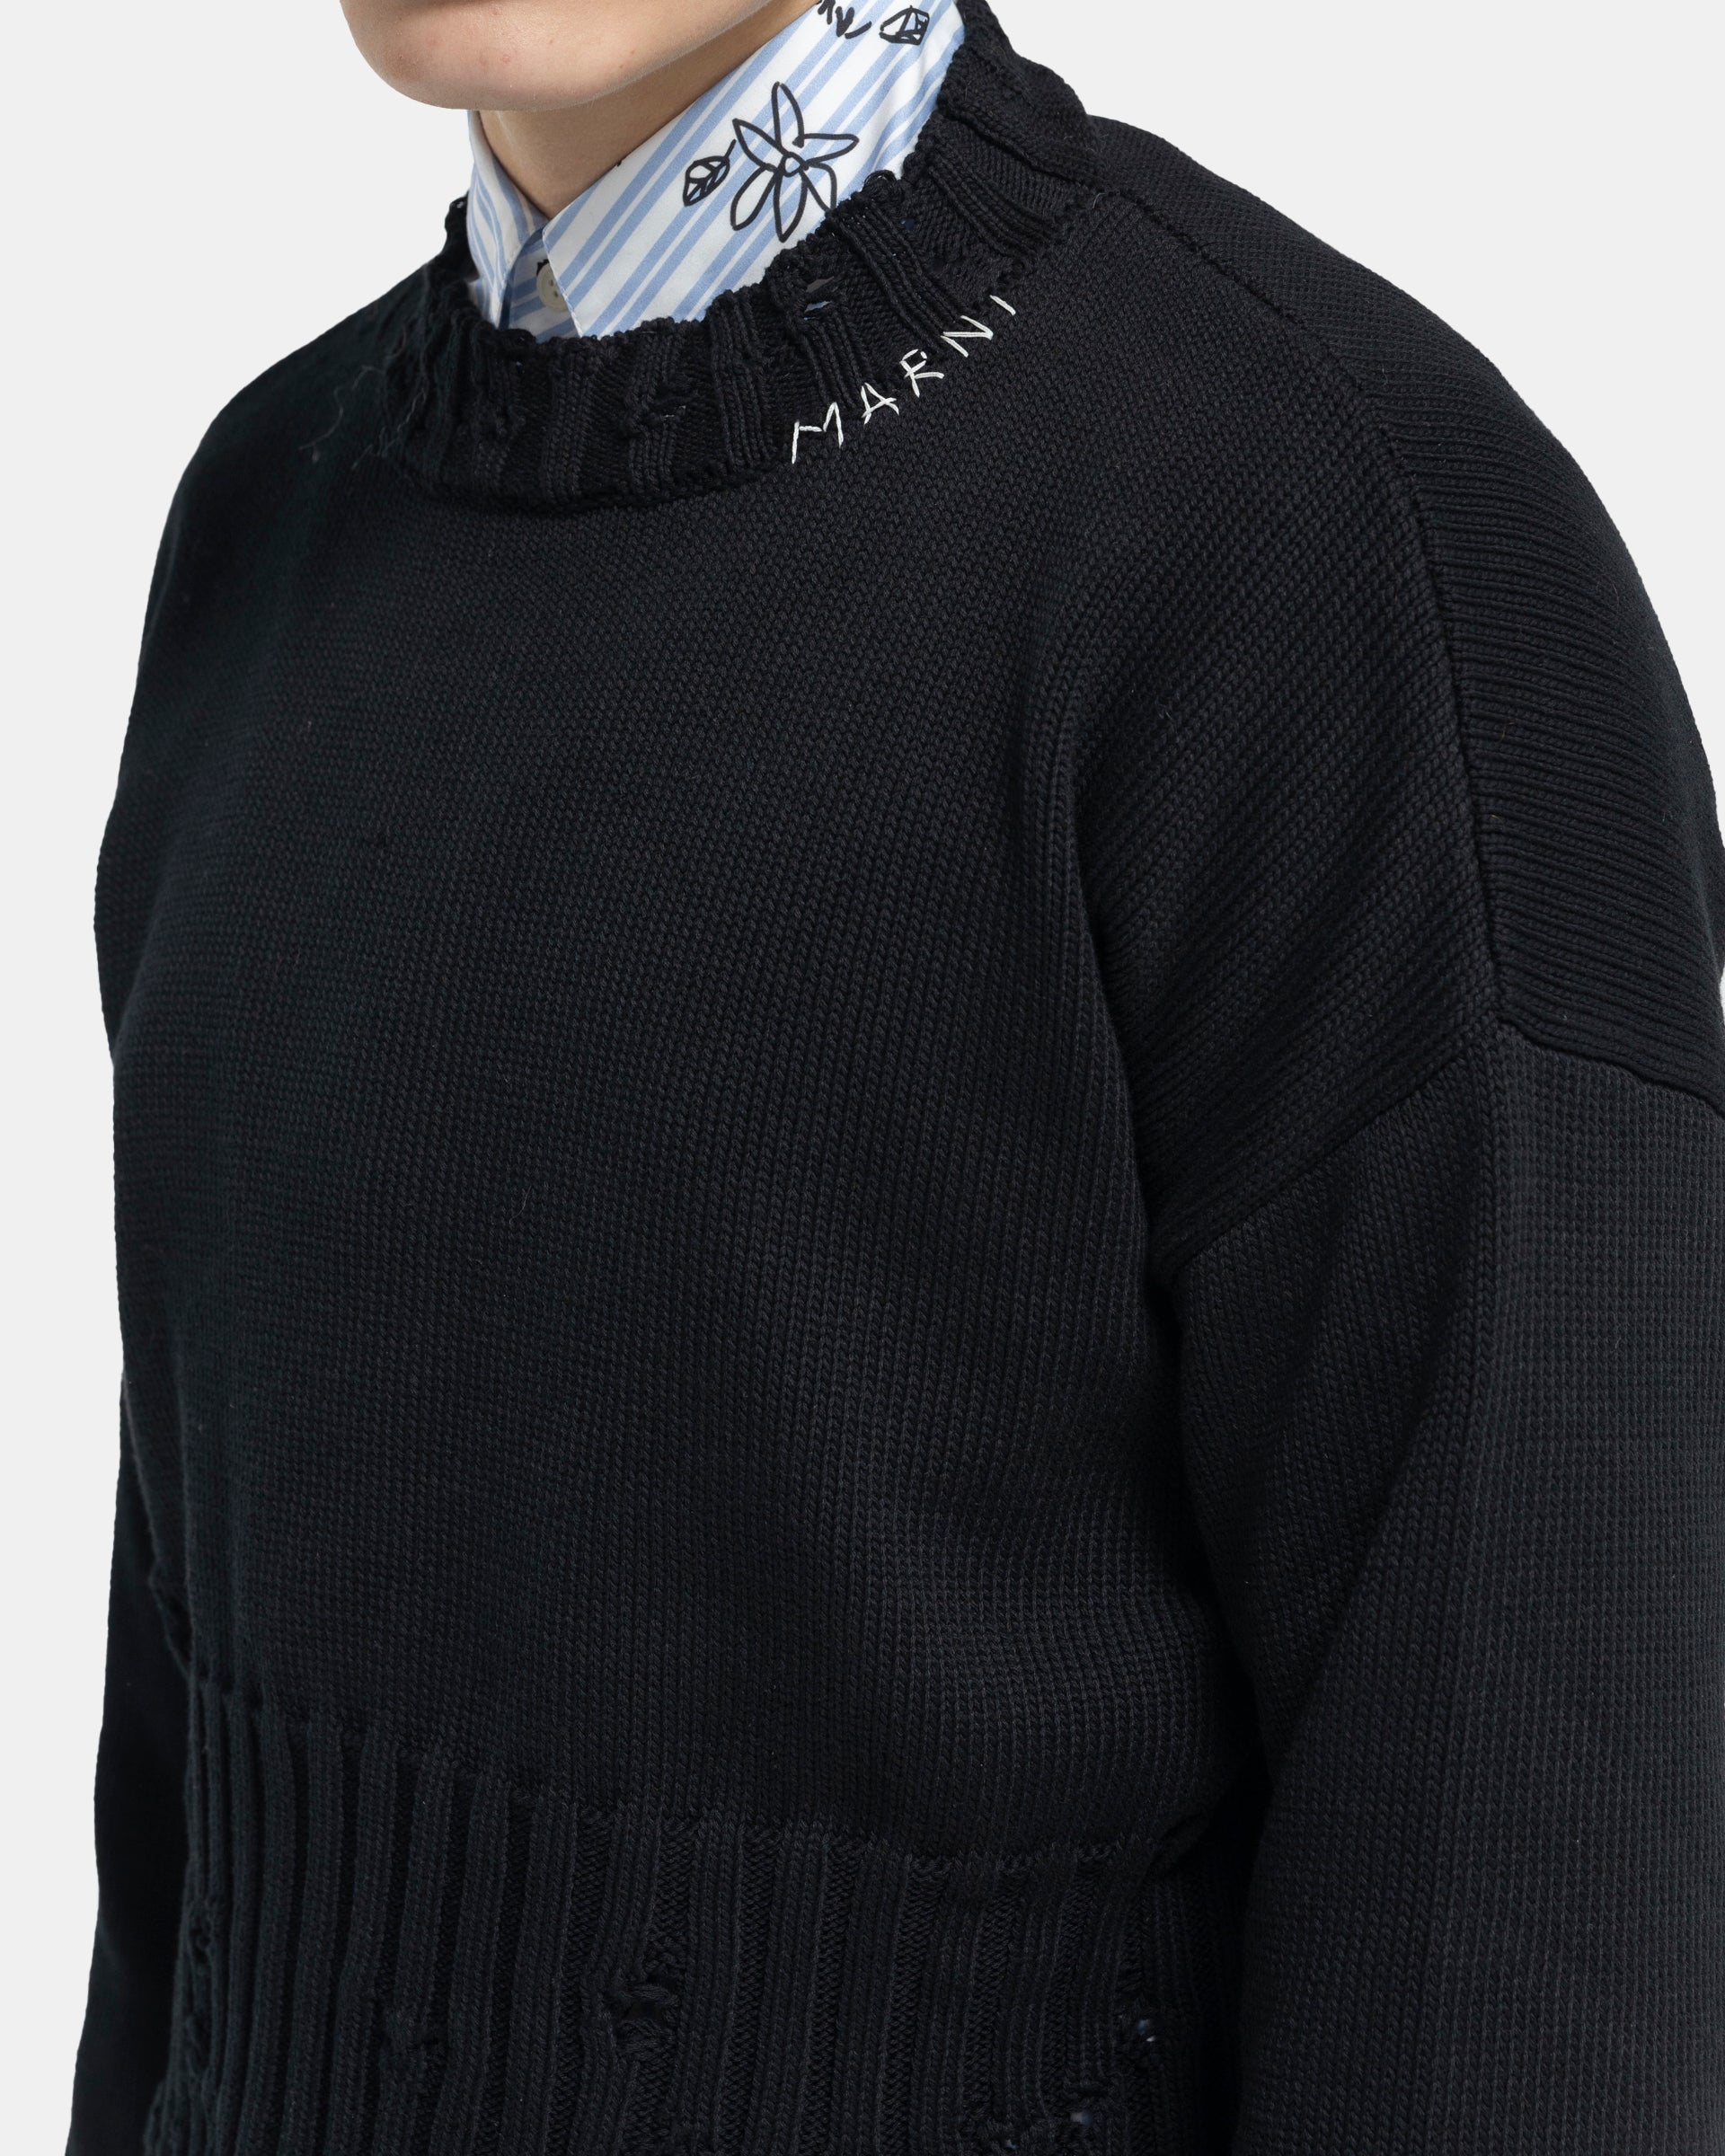 Distressed Sweater in Black